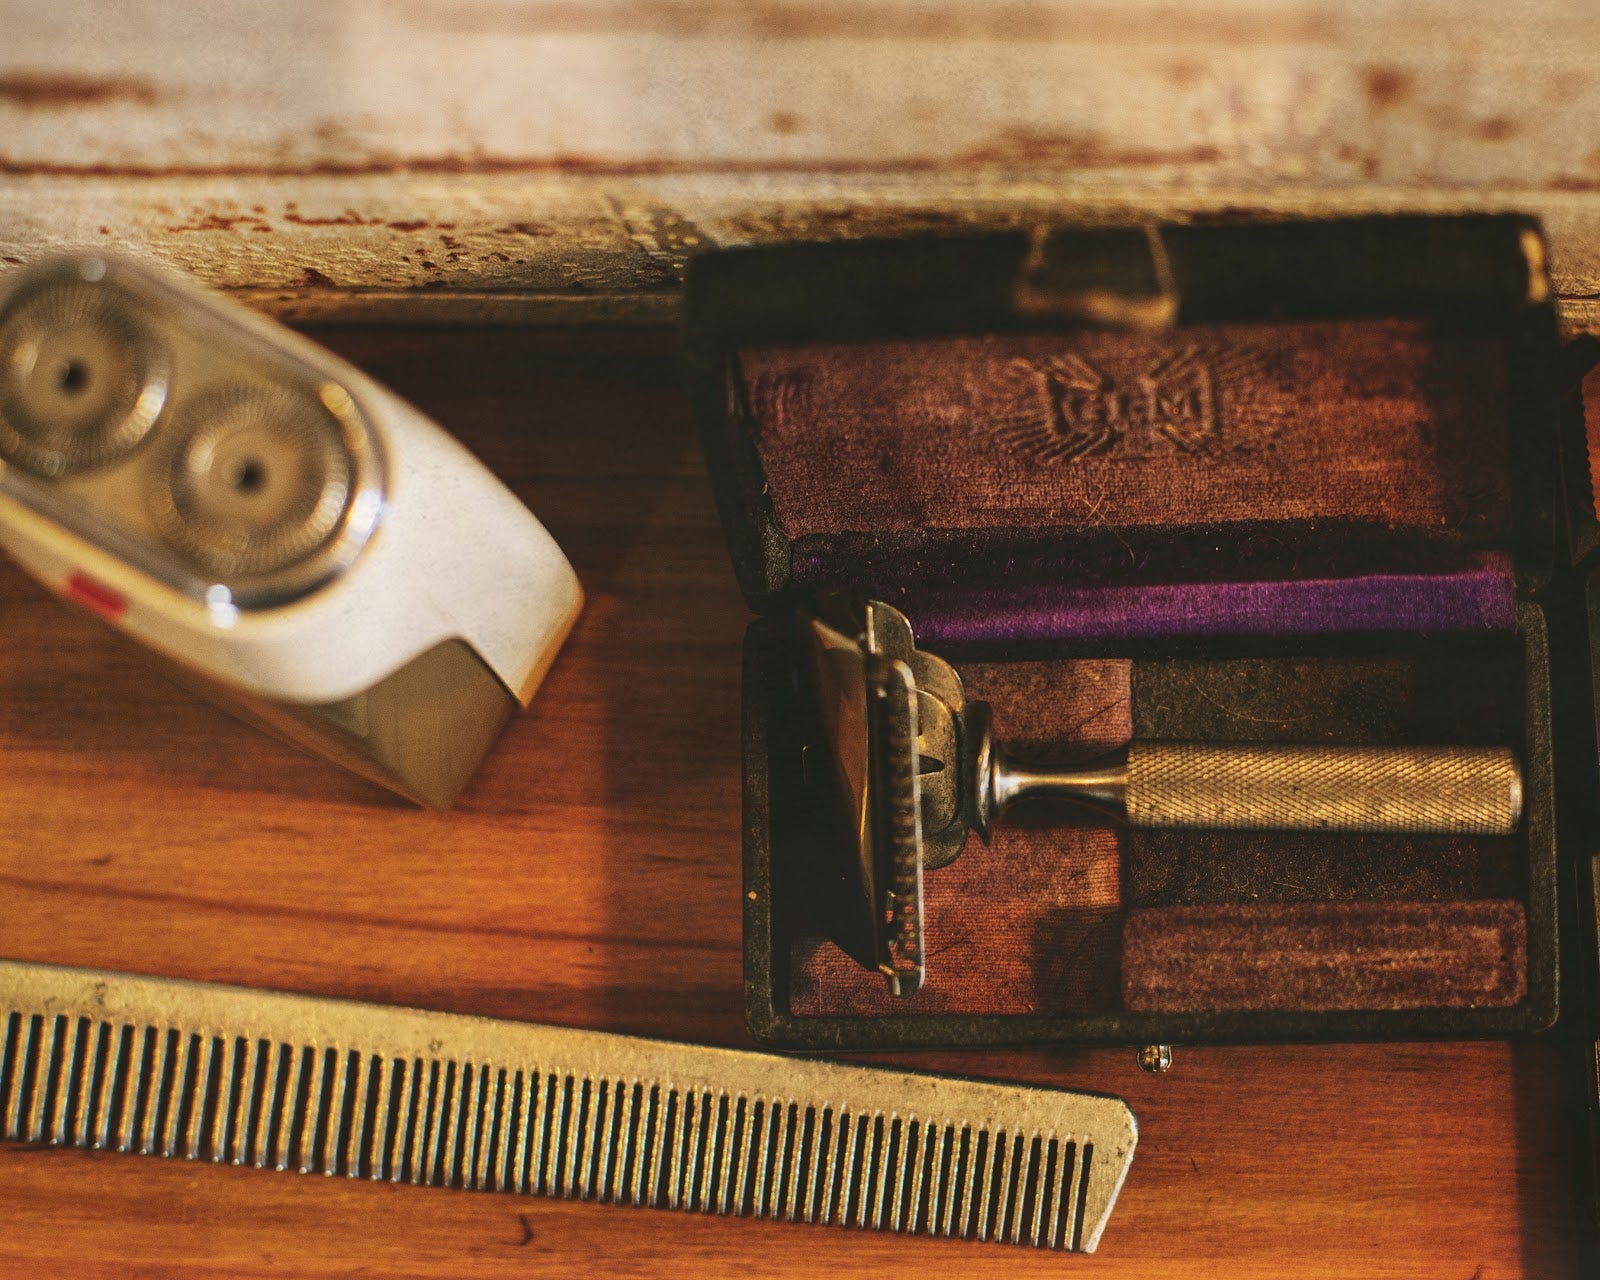 4 Reasons Why Men Should Want a Shaving Kit